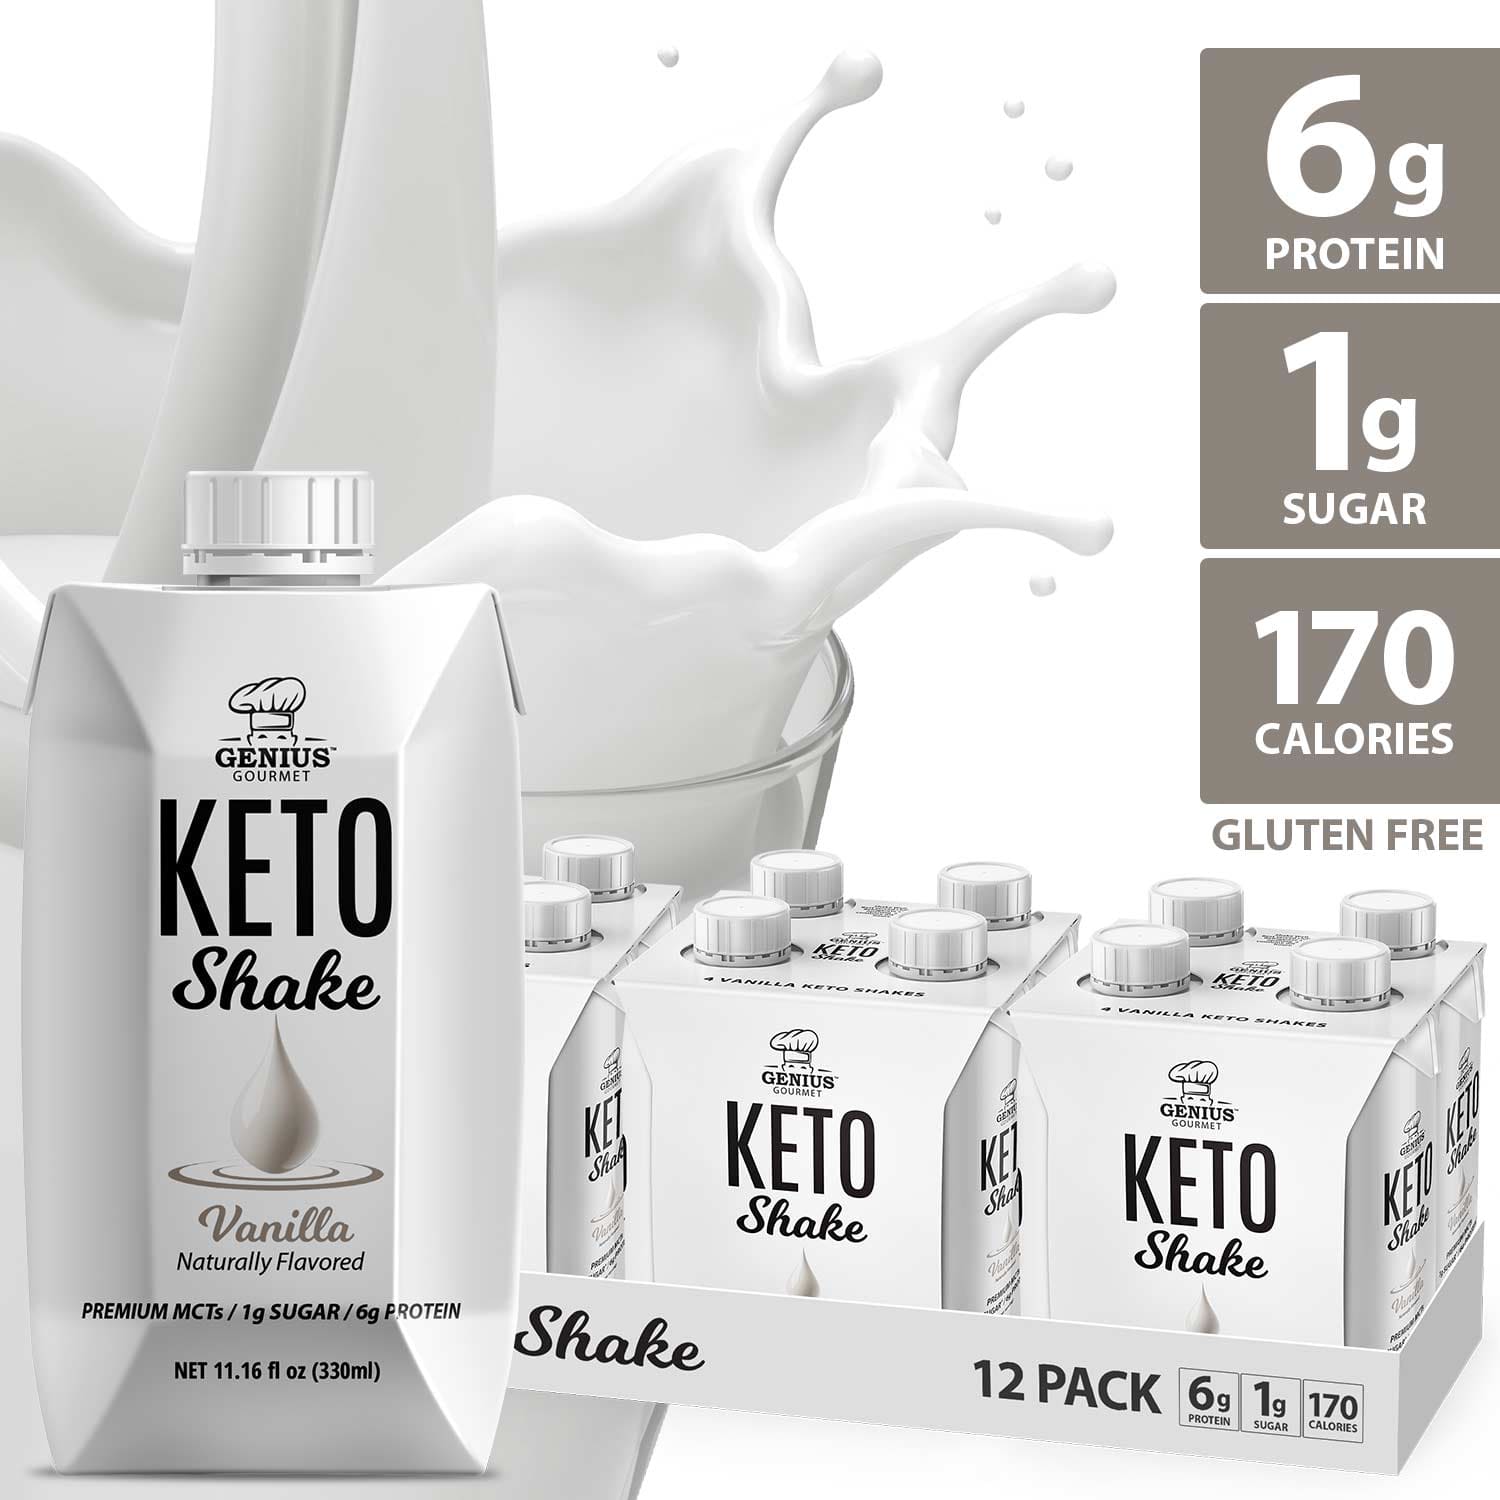 Keto Shakes, The best keto shakes